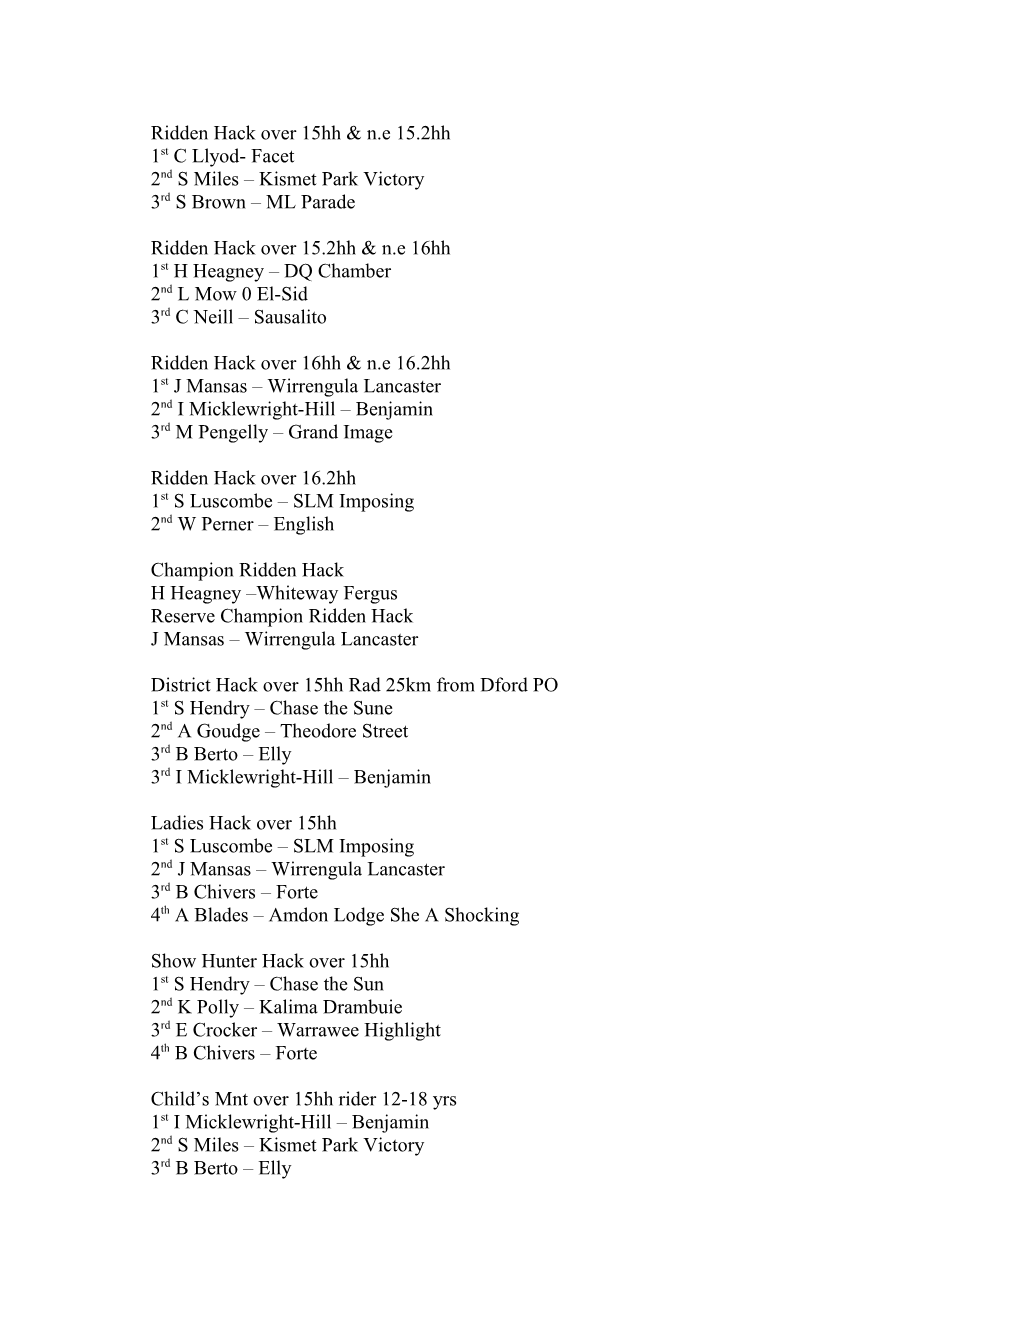 Daylesford & District Show Results Horse Program 2006